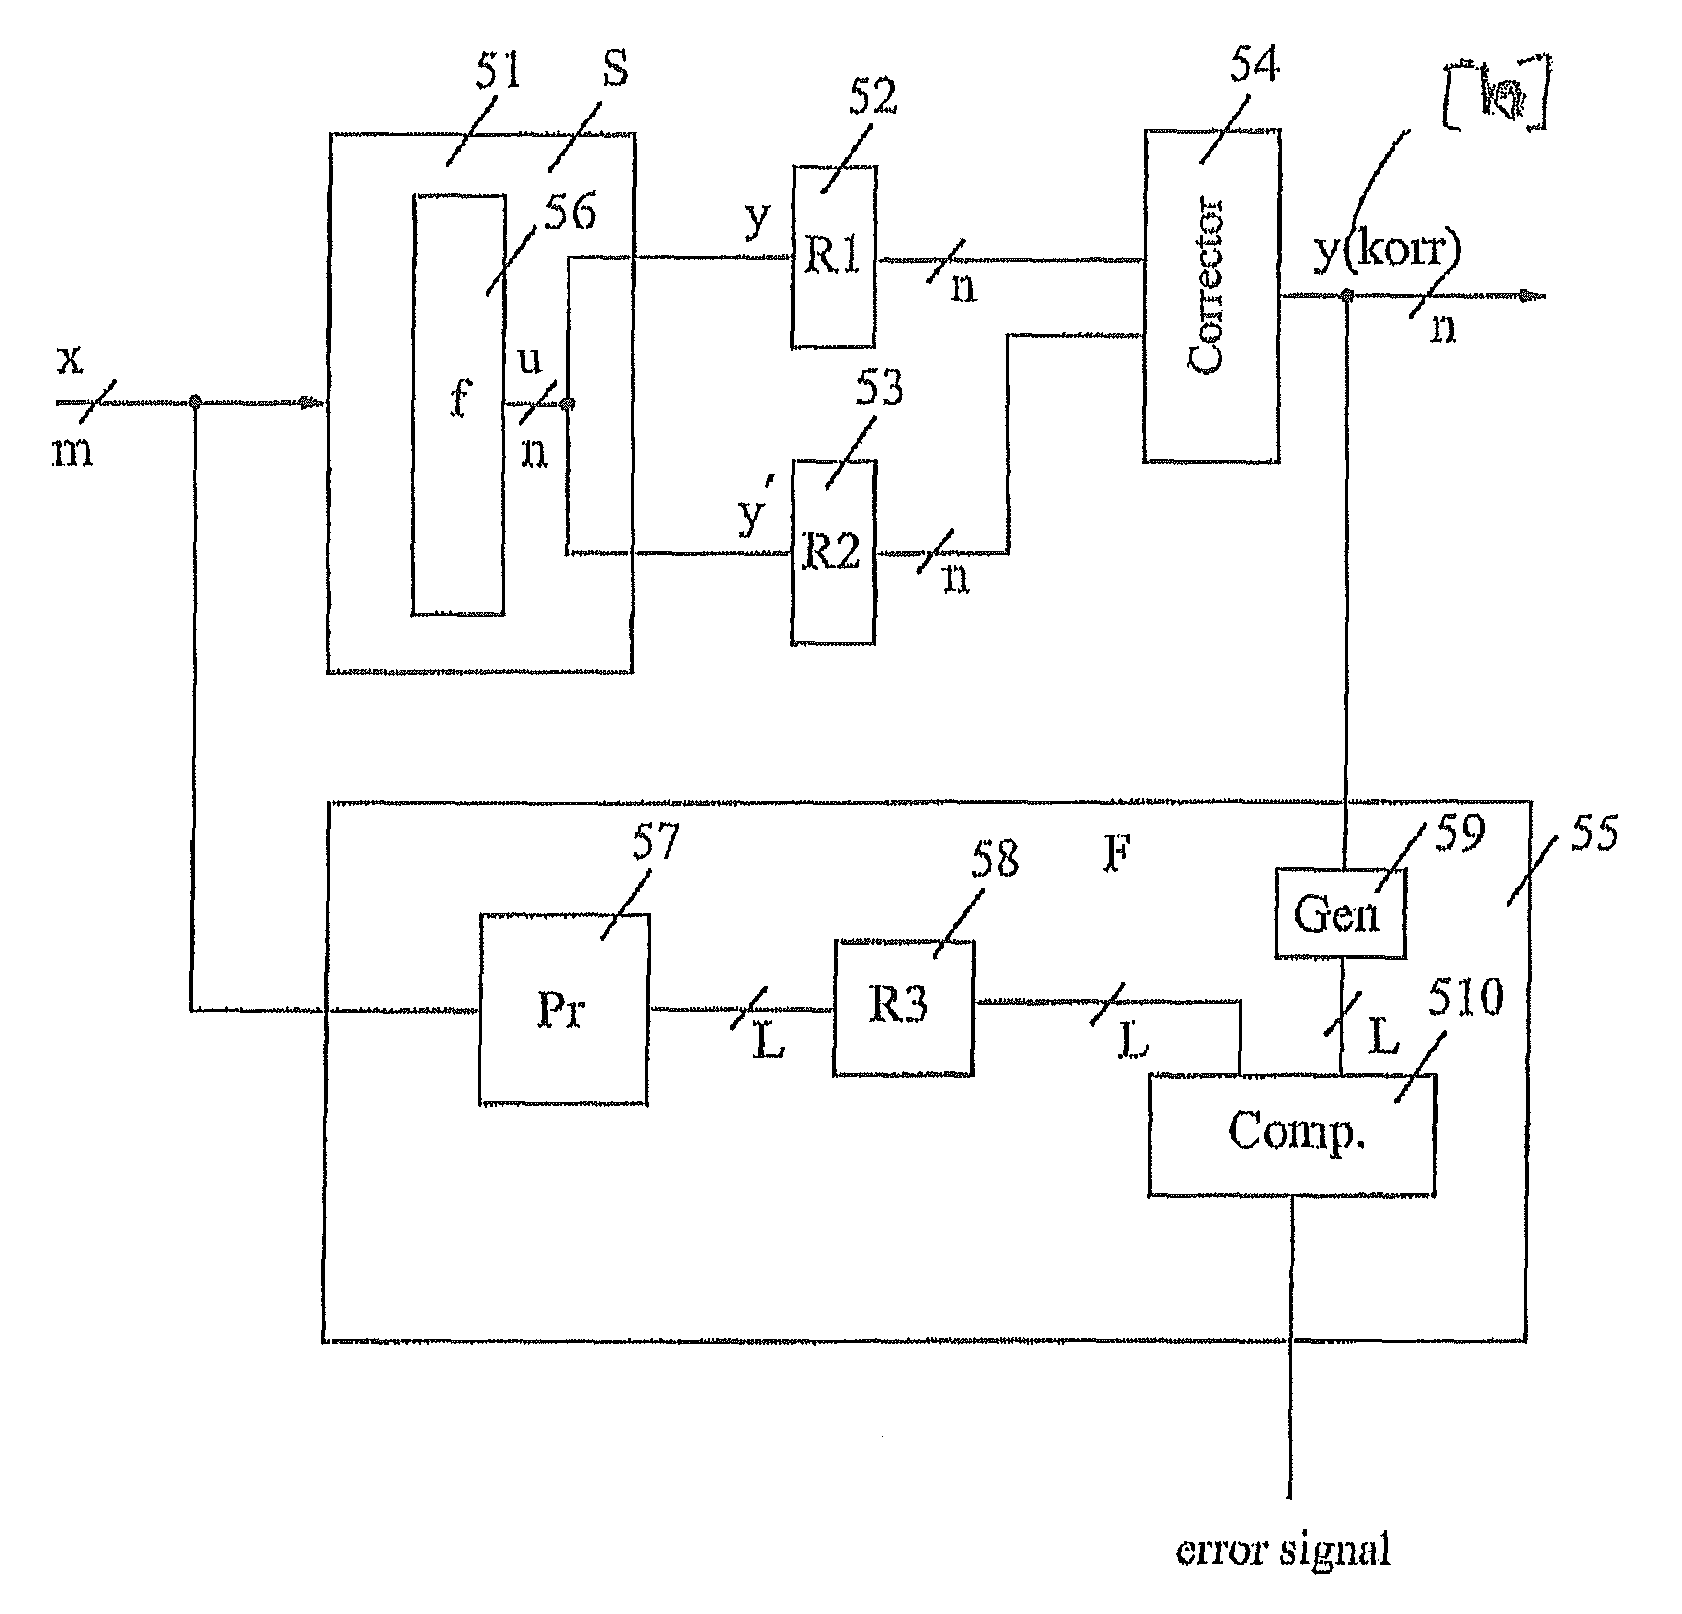 Circuit arrangement